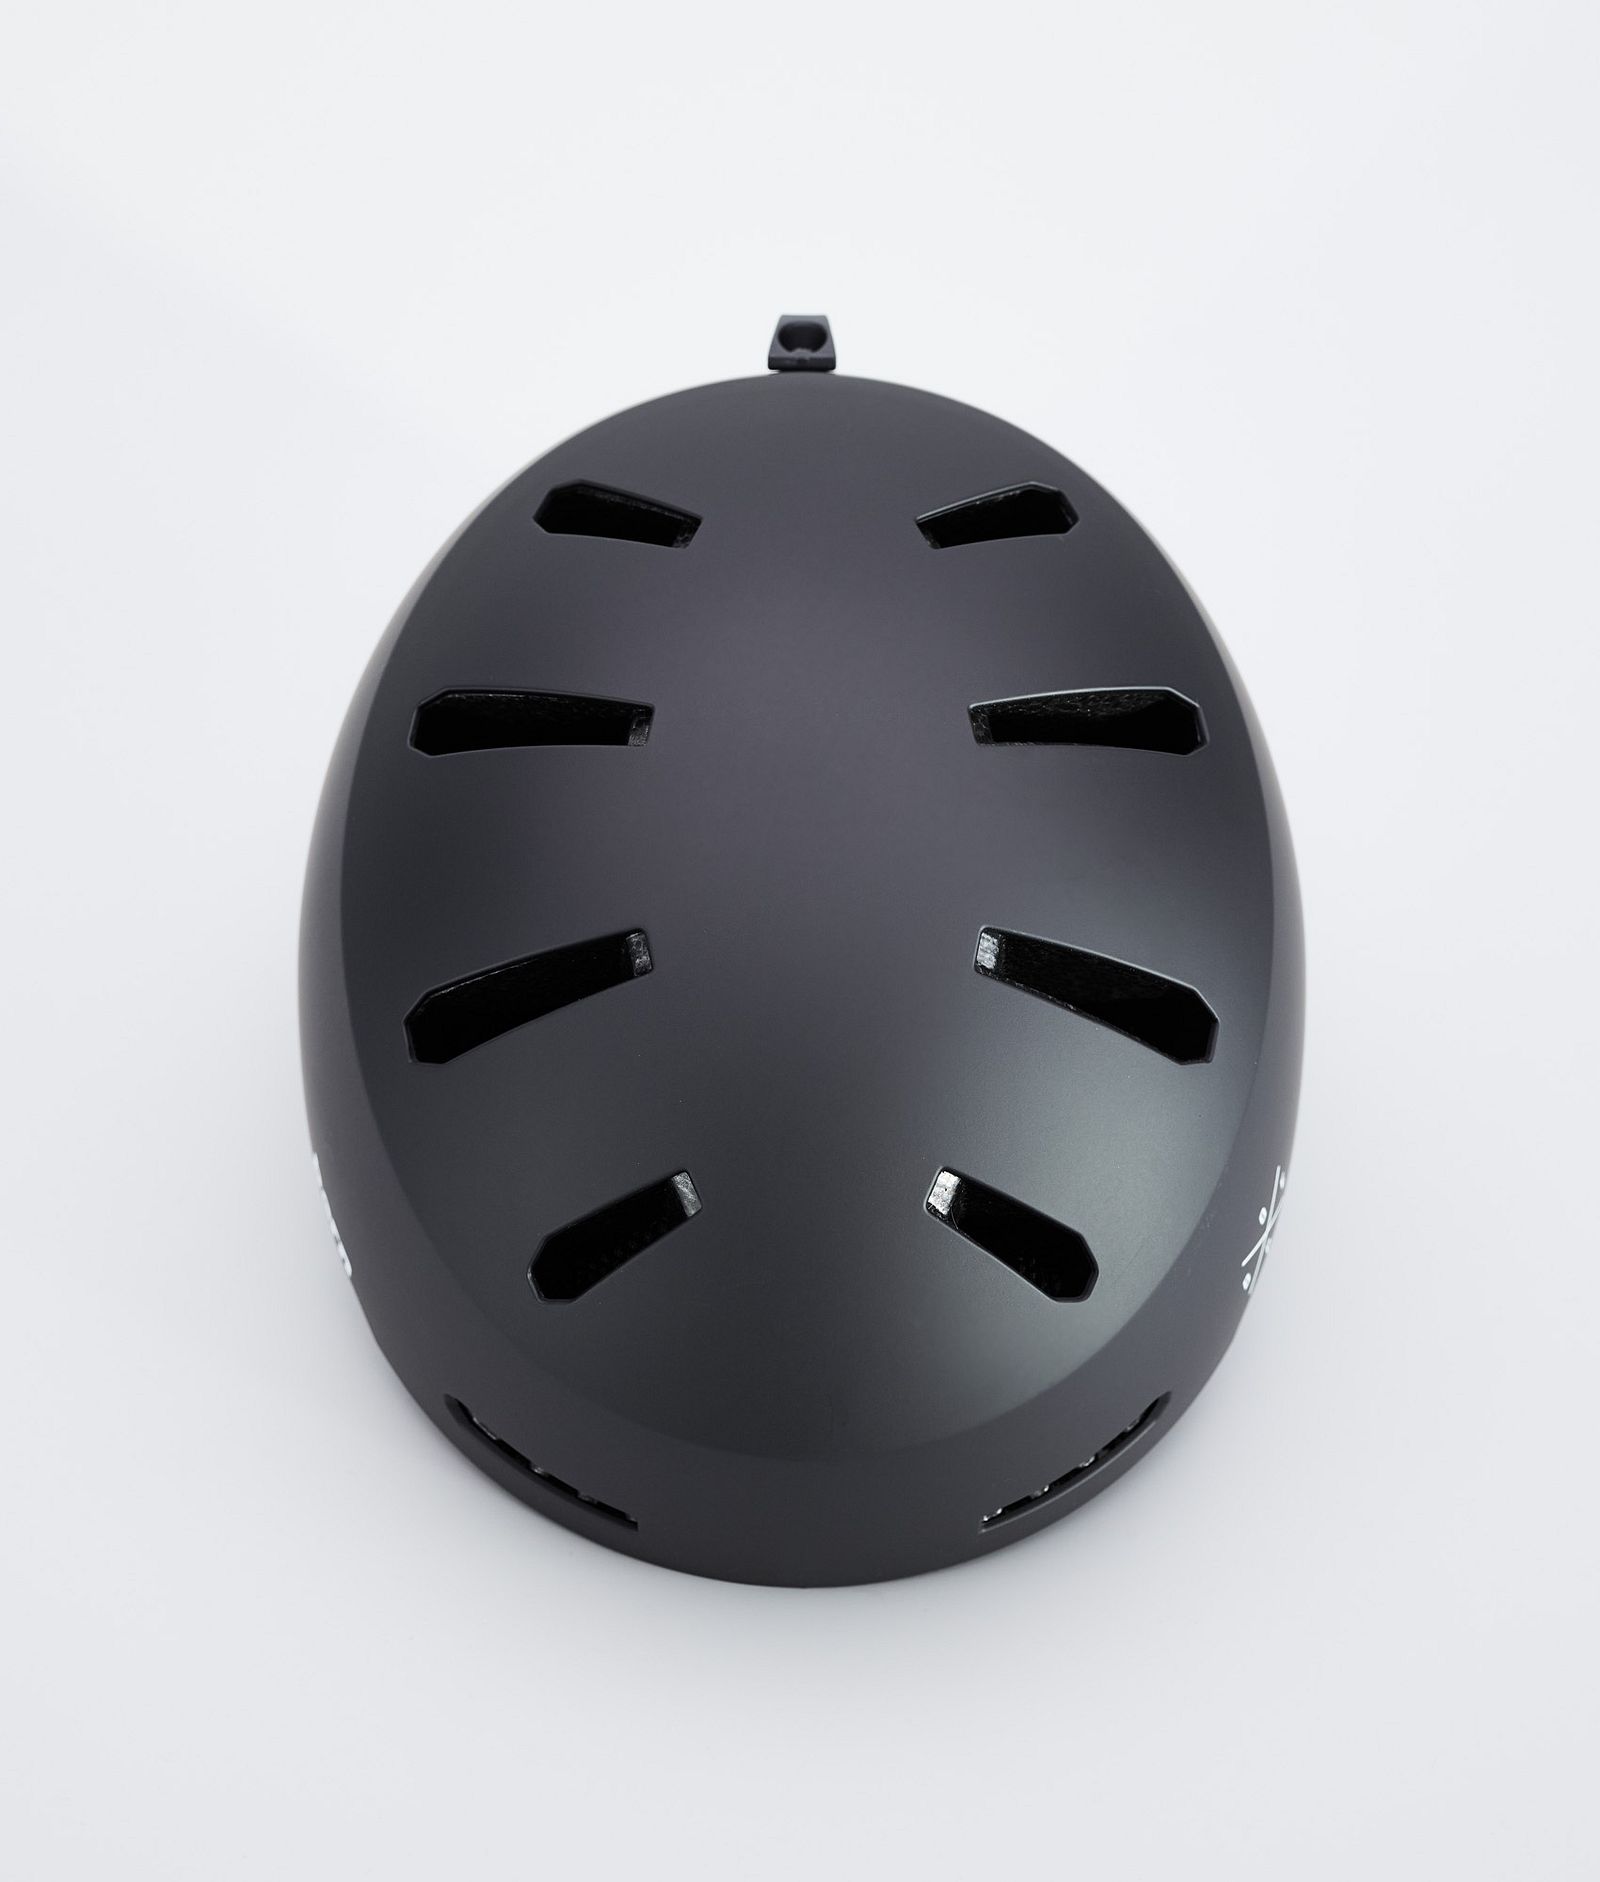 Macon 2.0 Lyžařská Helma X-Up Matte Black w/ Black